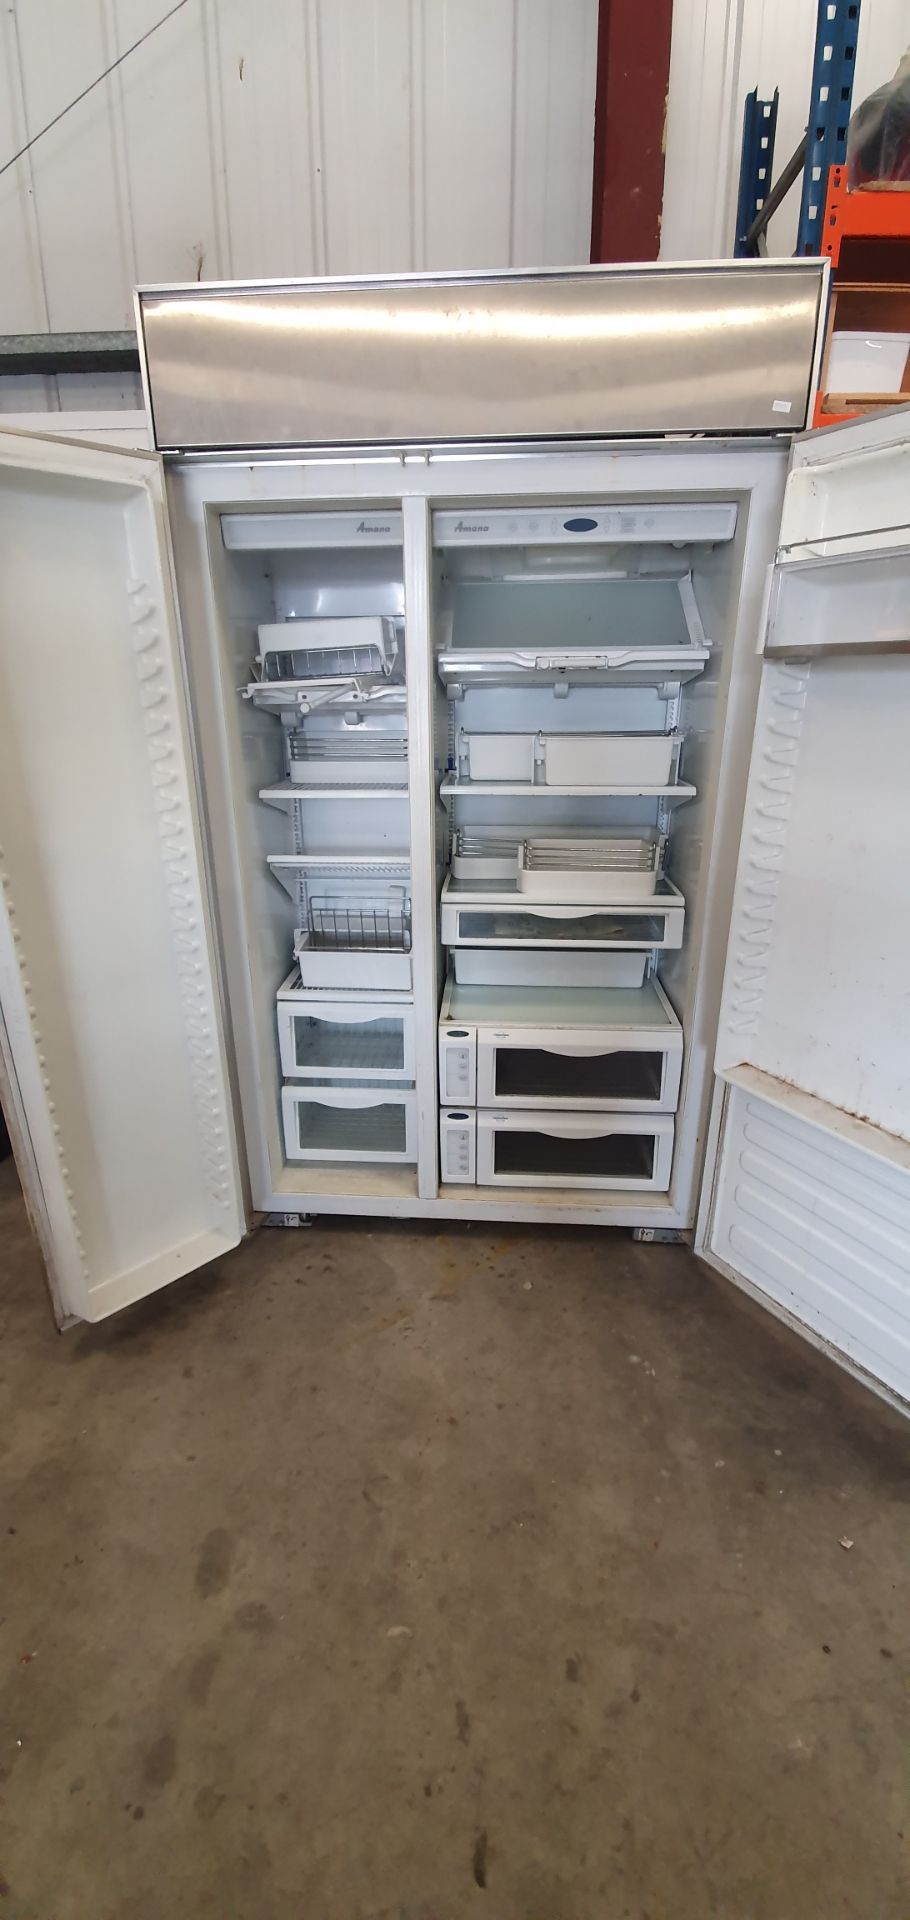 S/S Amana upright domestic fridge/freezer 1250w x 650d x 2100h - at Cornwall Street, Hull, HU8 8AF - Image 4 of 5